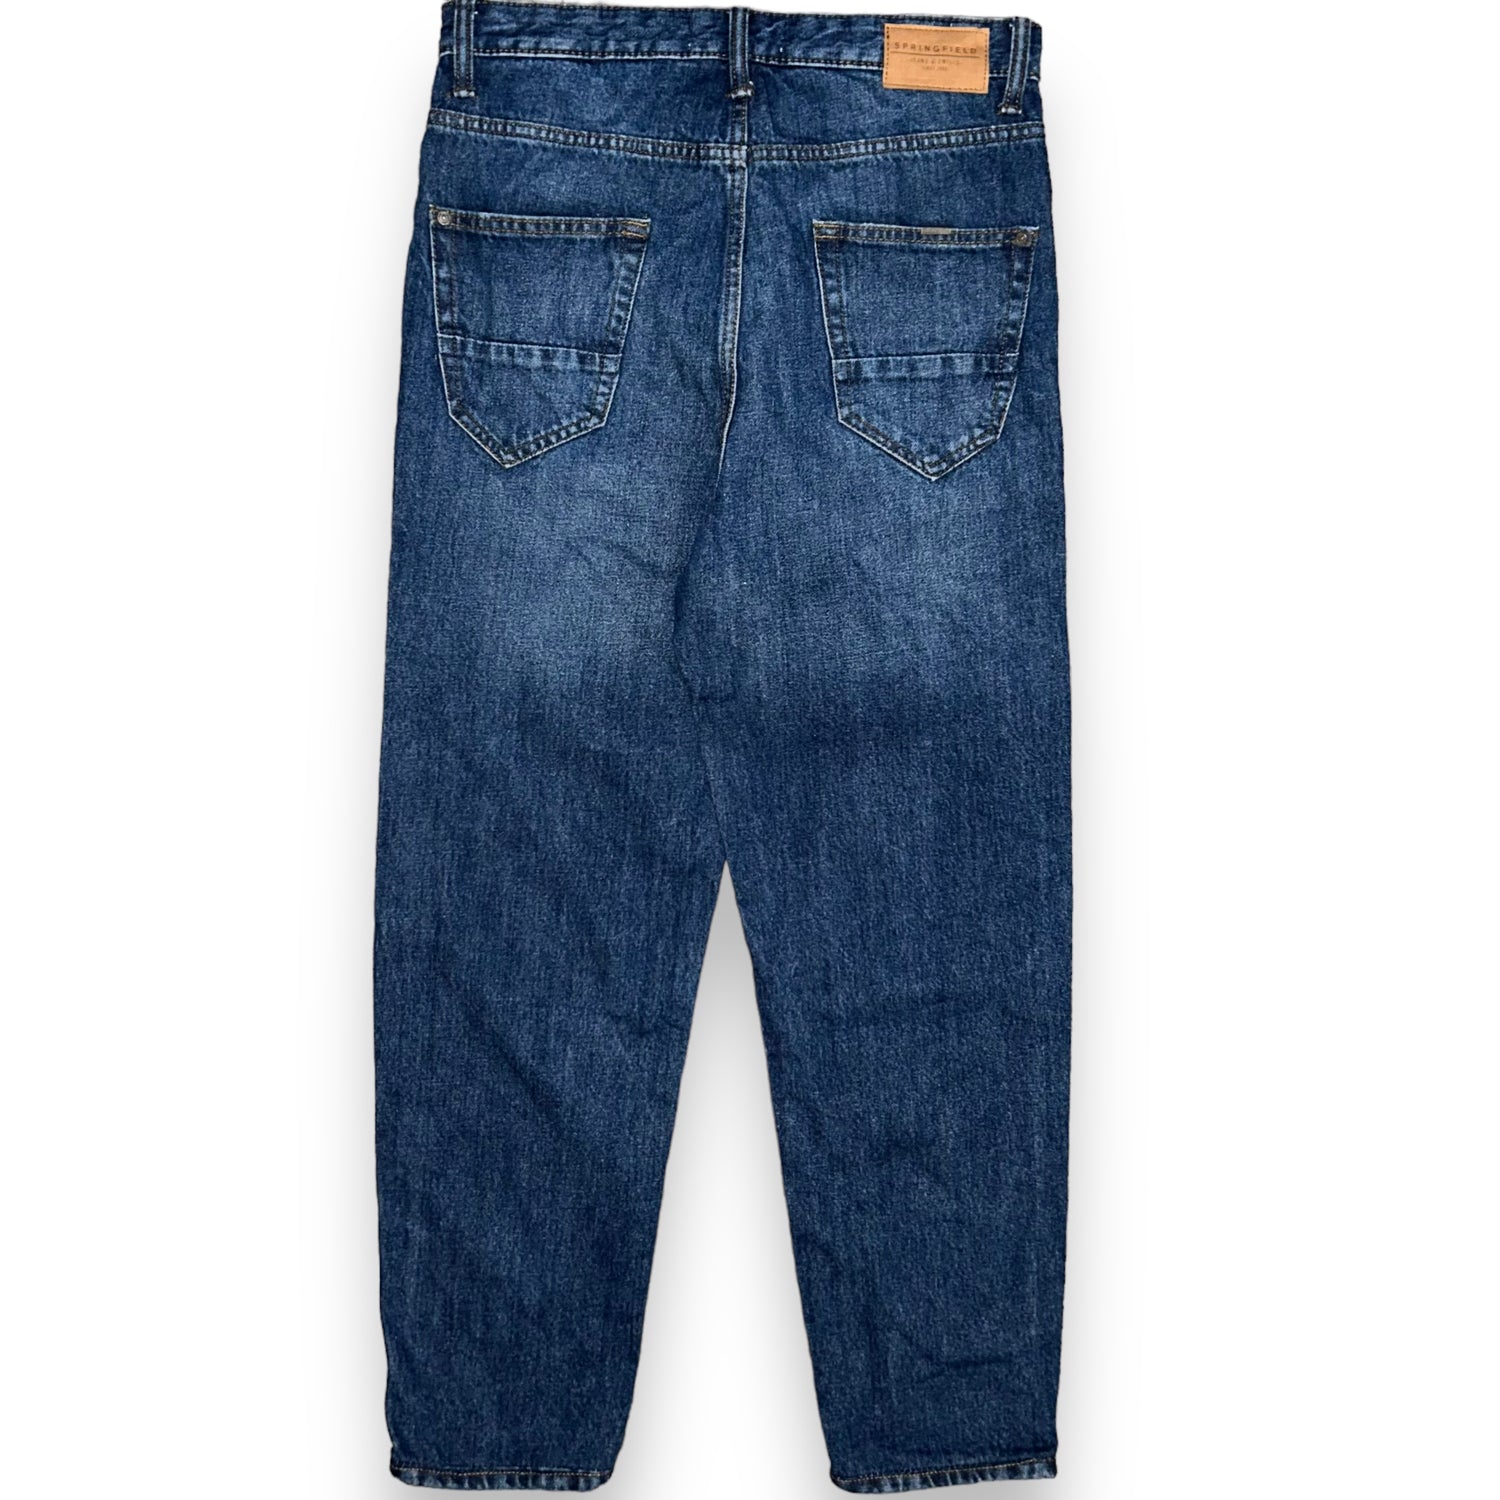 Jeans Springfield  (30 USA  S)